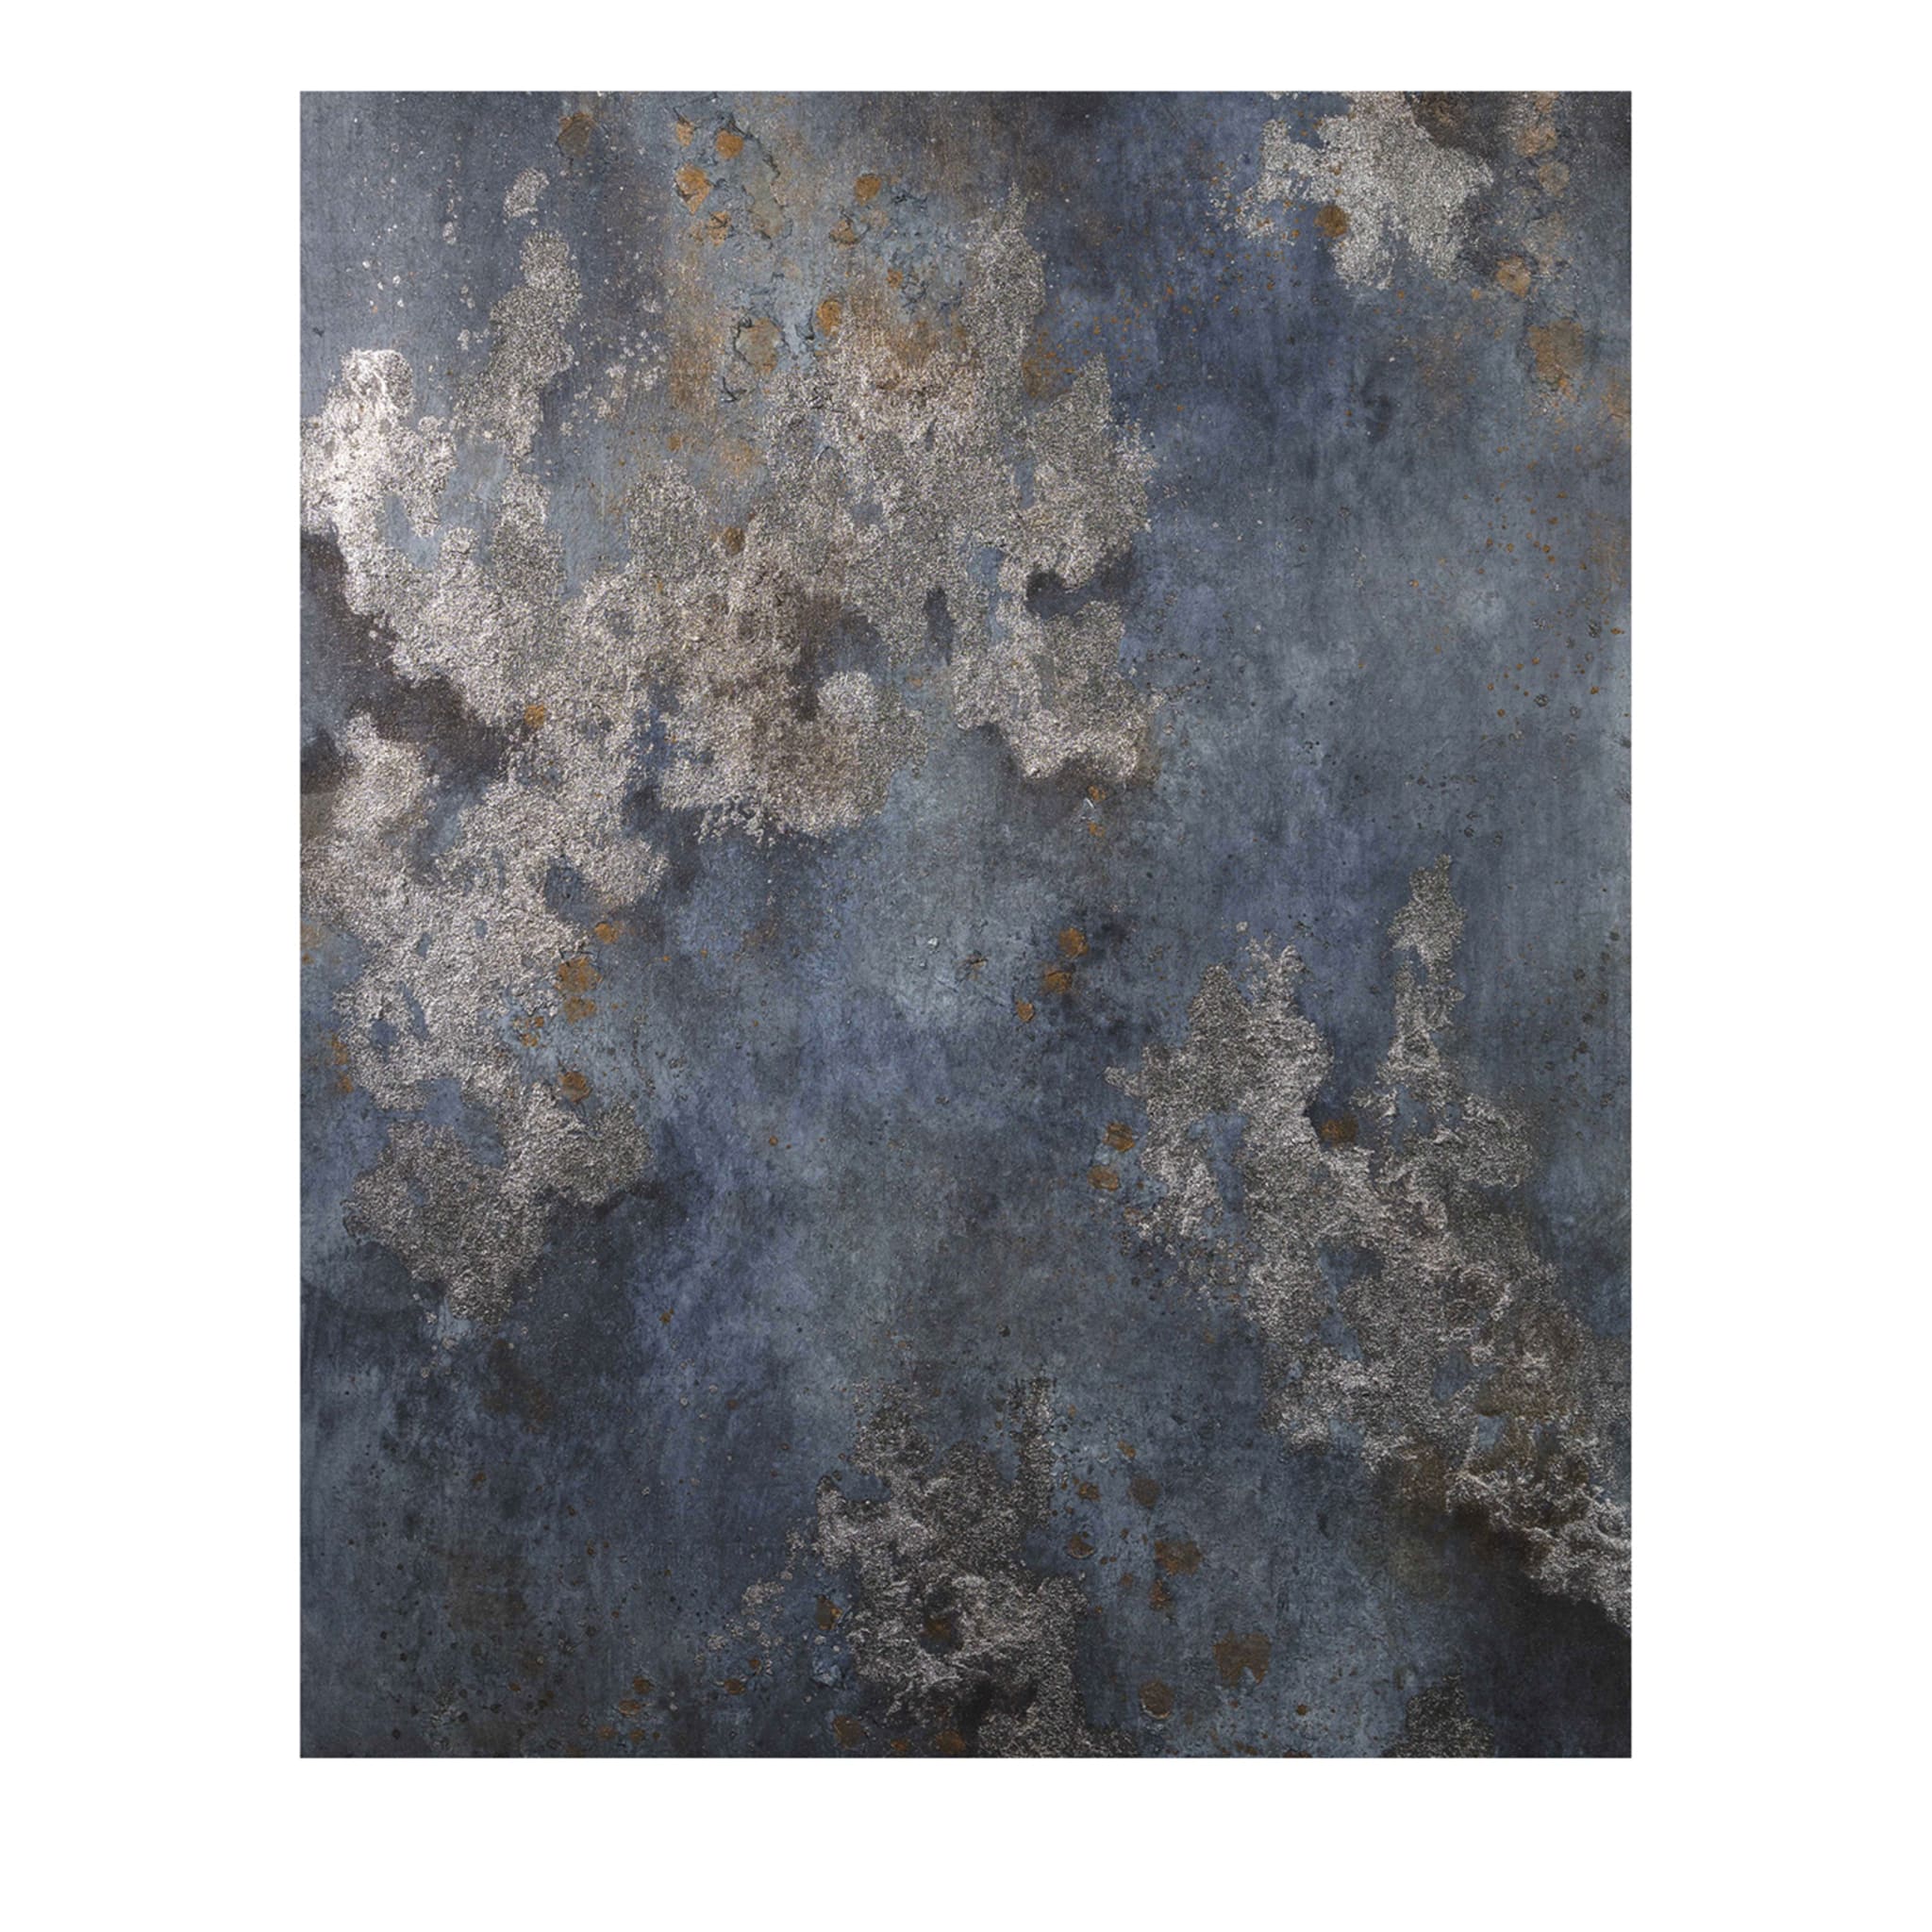 Midnight Moon Dust Gemälde - Hauptansicht